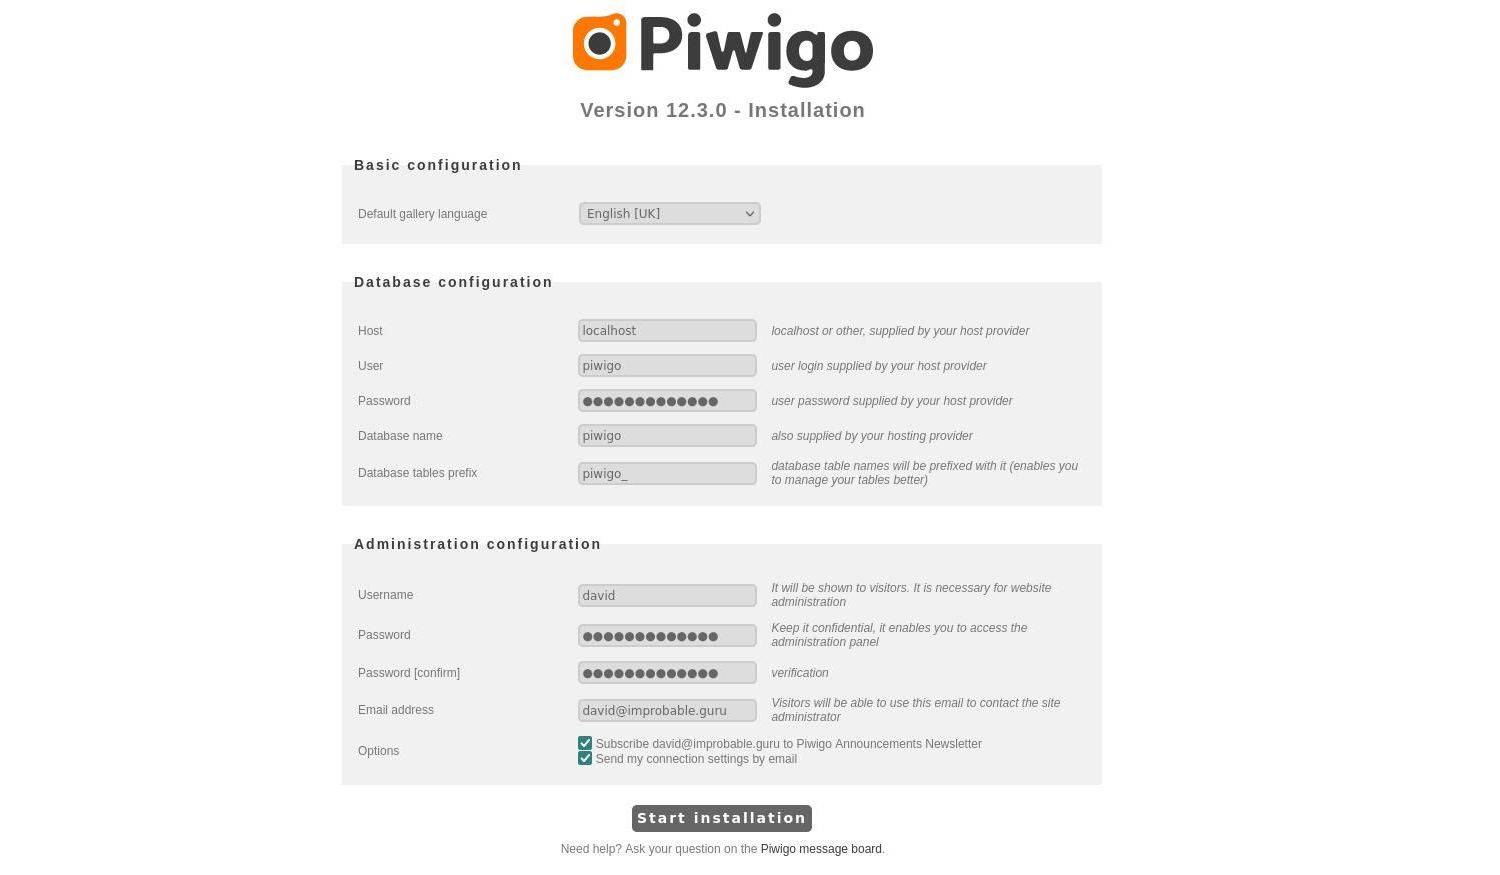 piwigo basic configuration screen